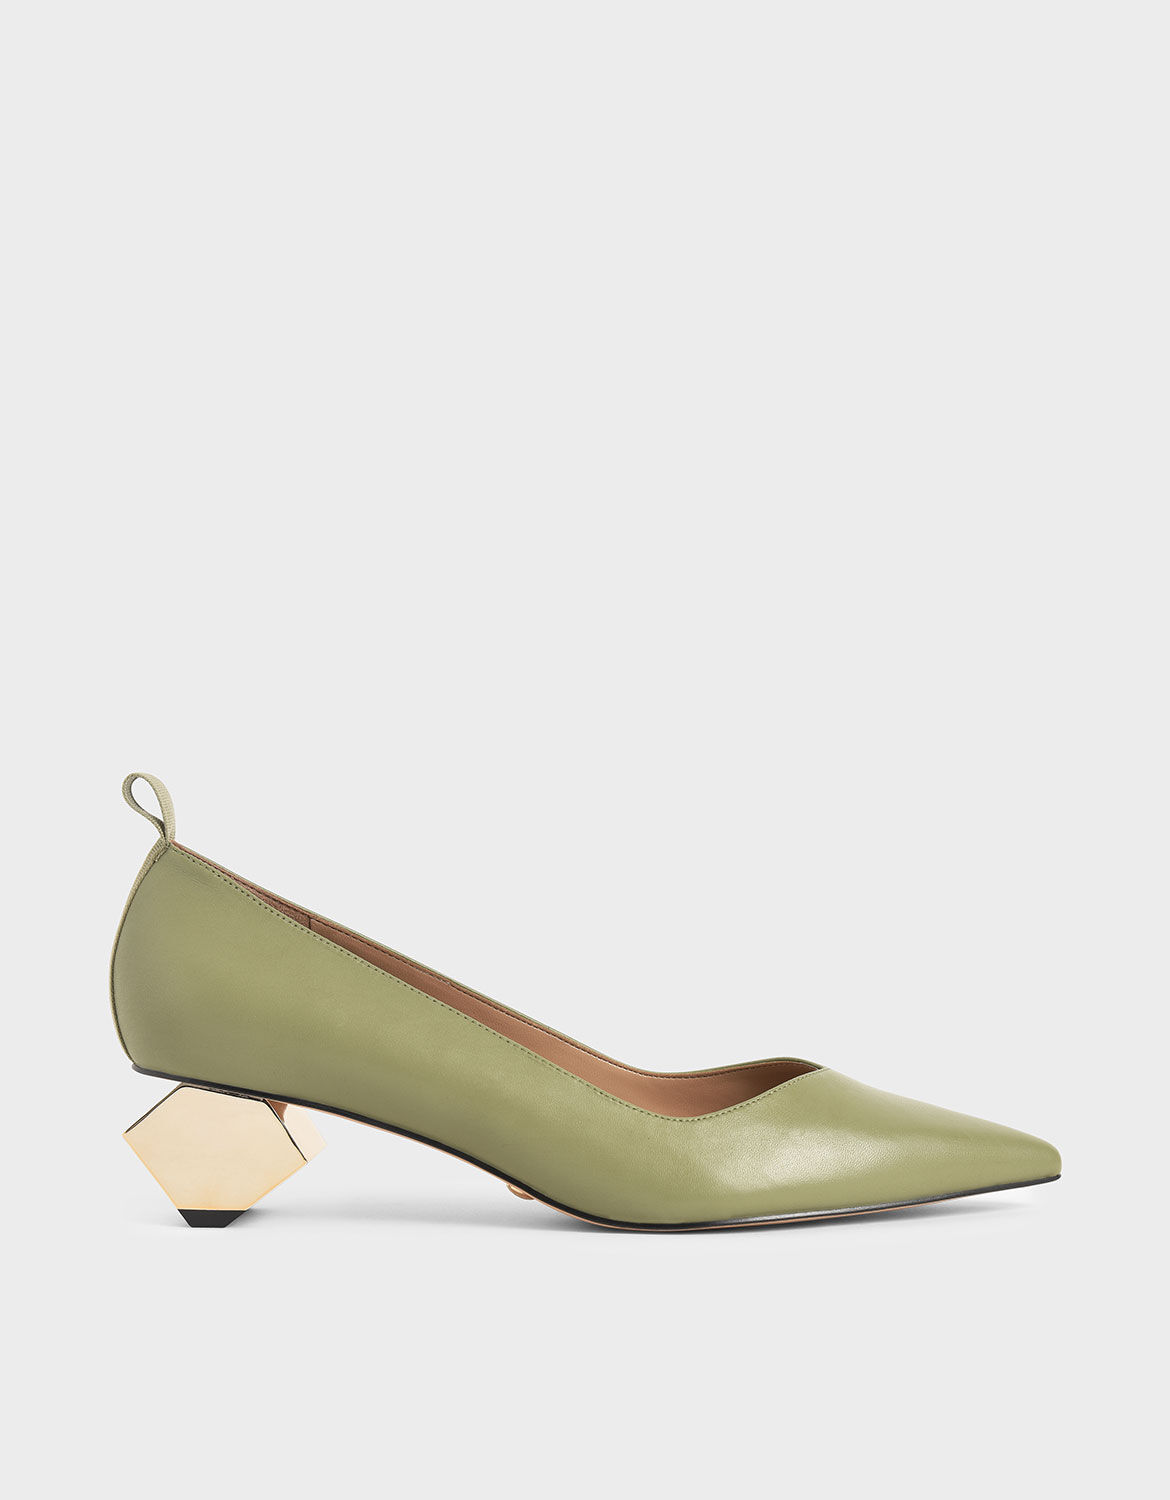 sage green shoes heels